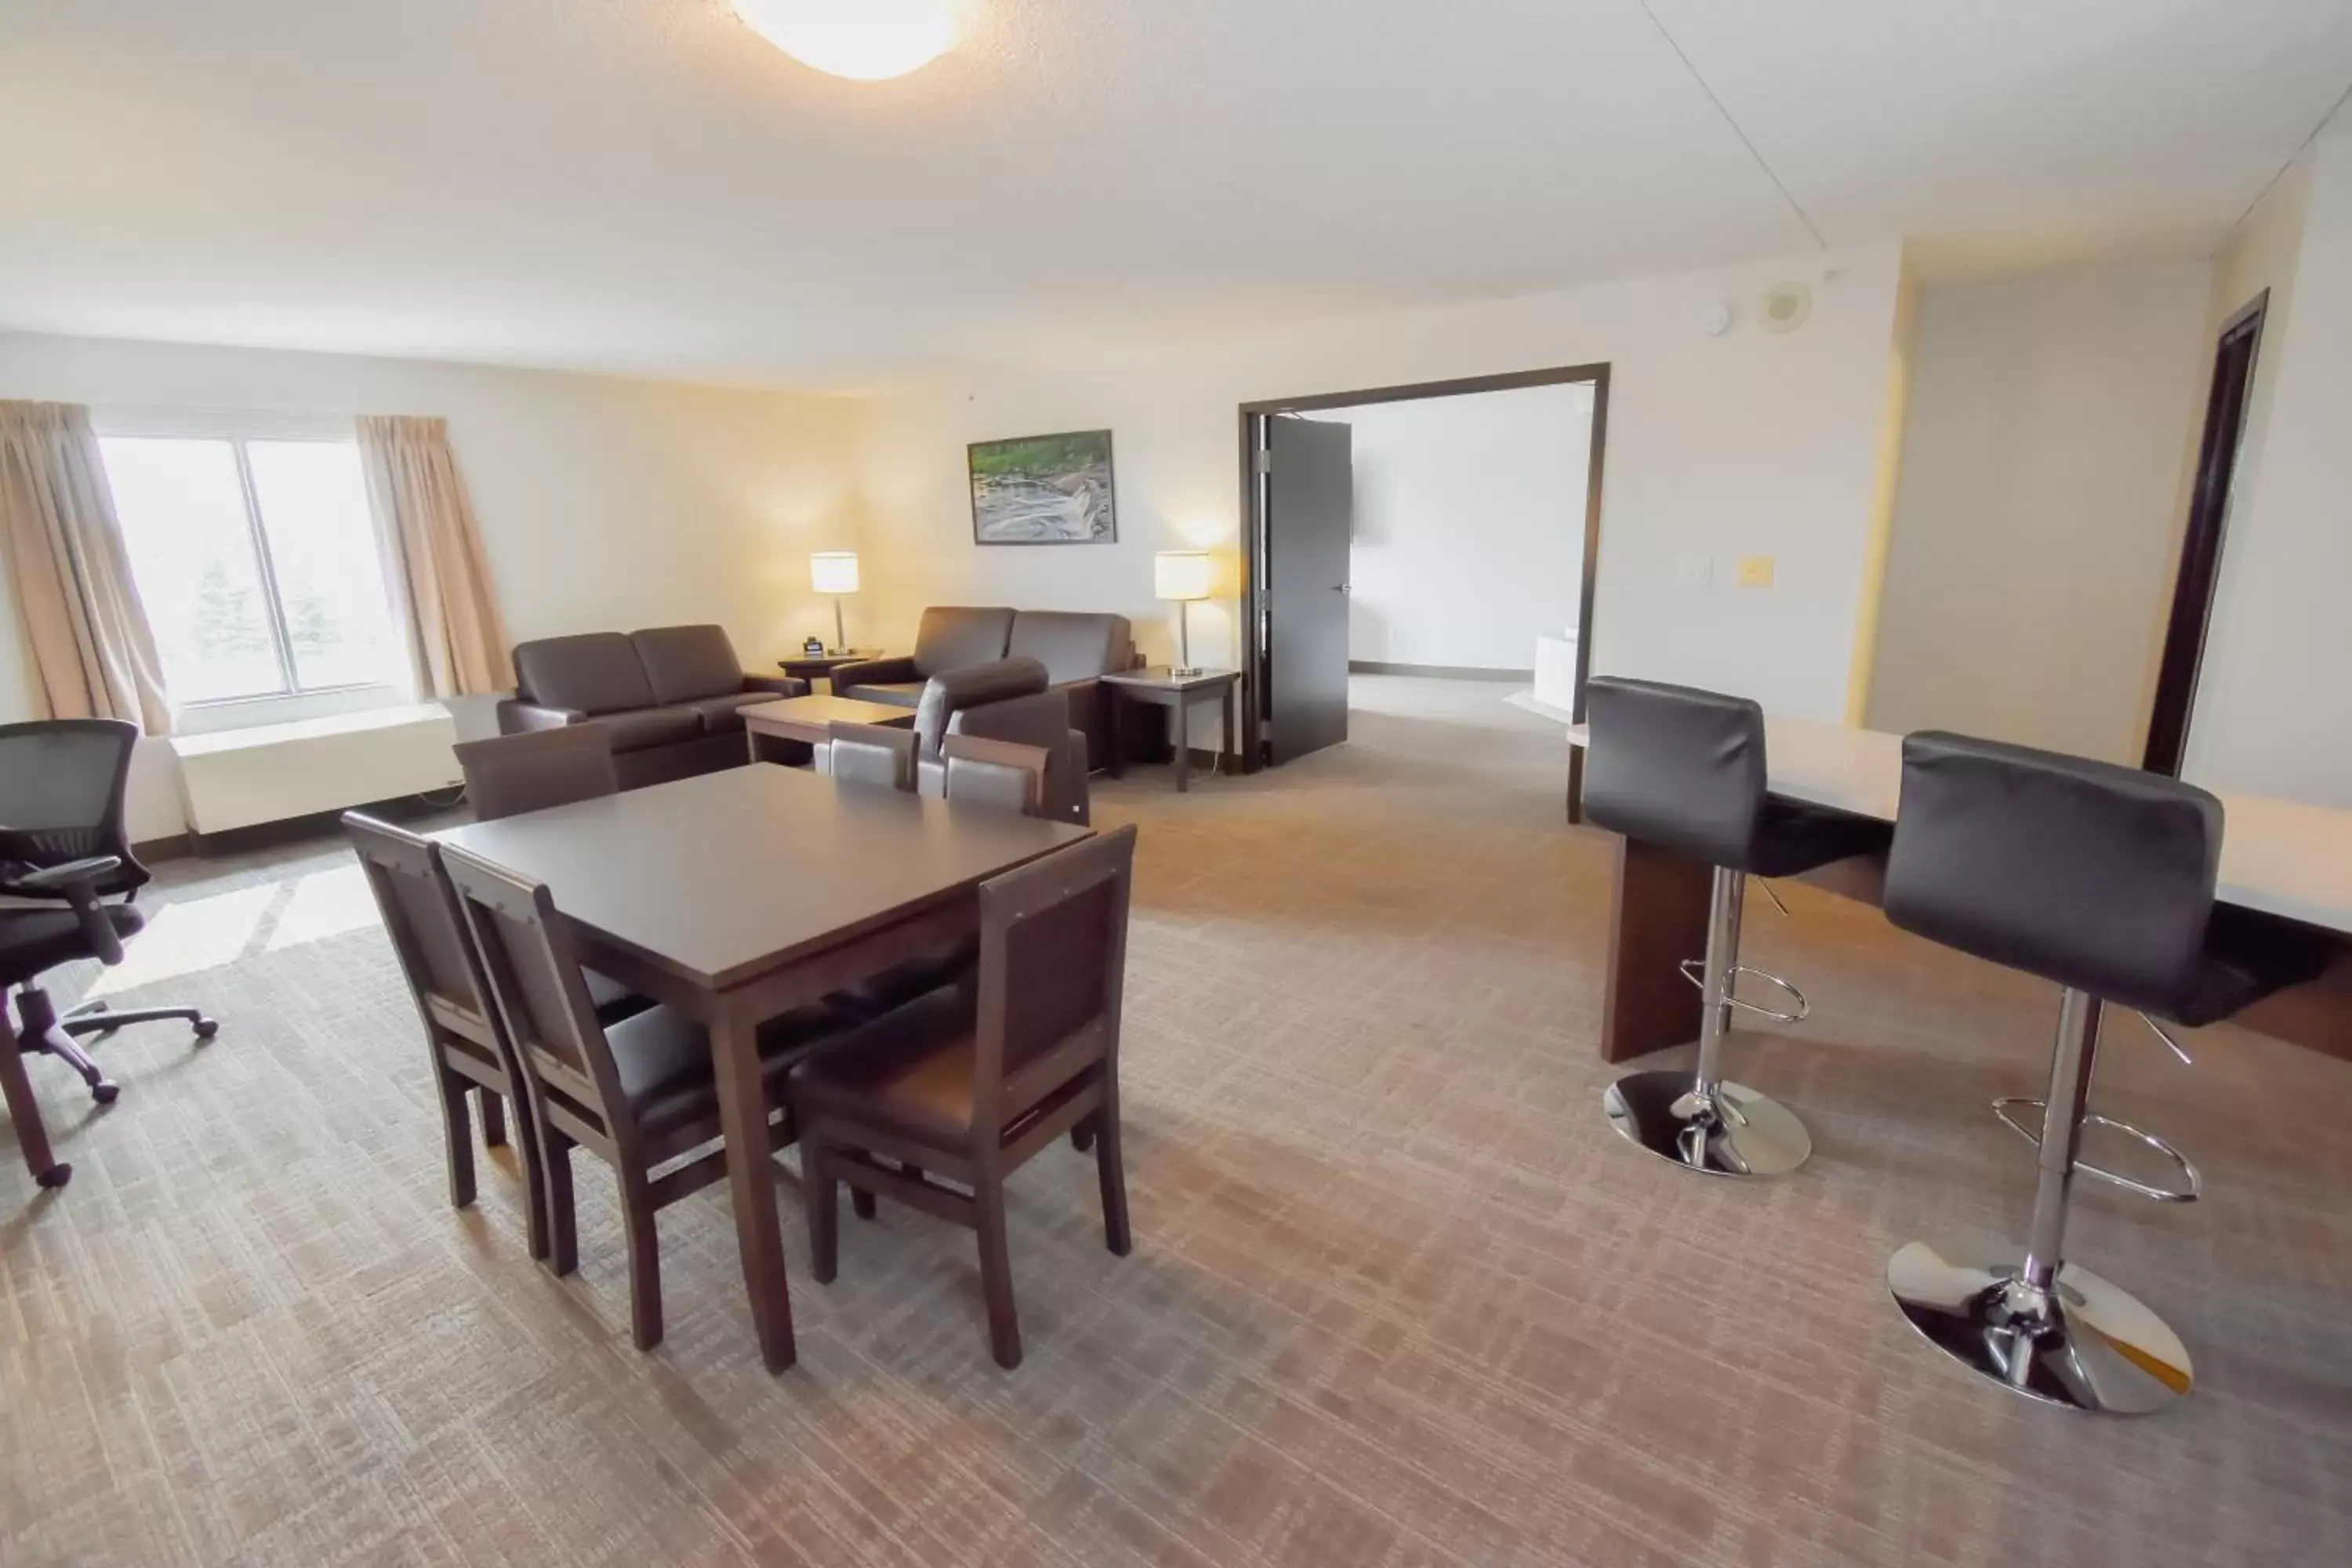 Living room, Dining Area in Canad Inns Destination Centre Club Regent Casino Hotel